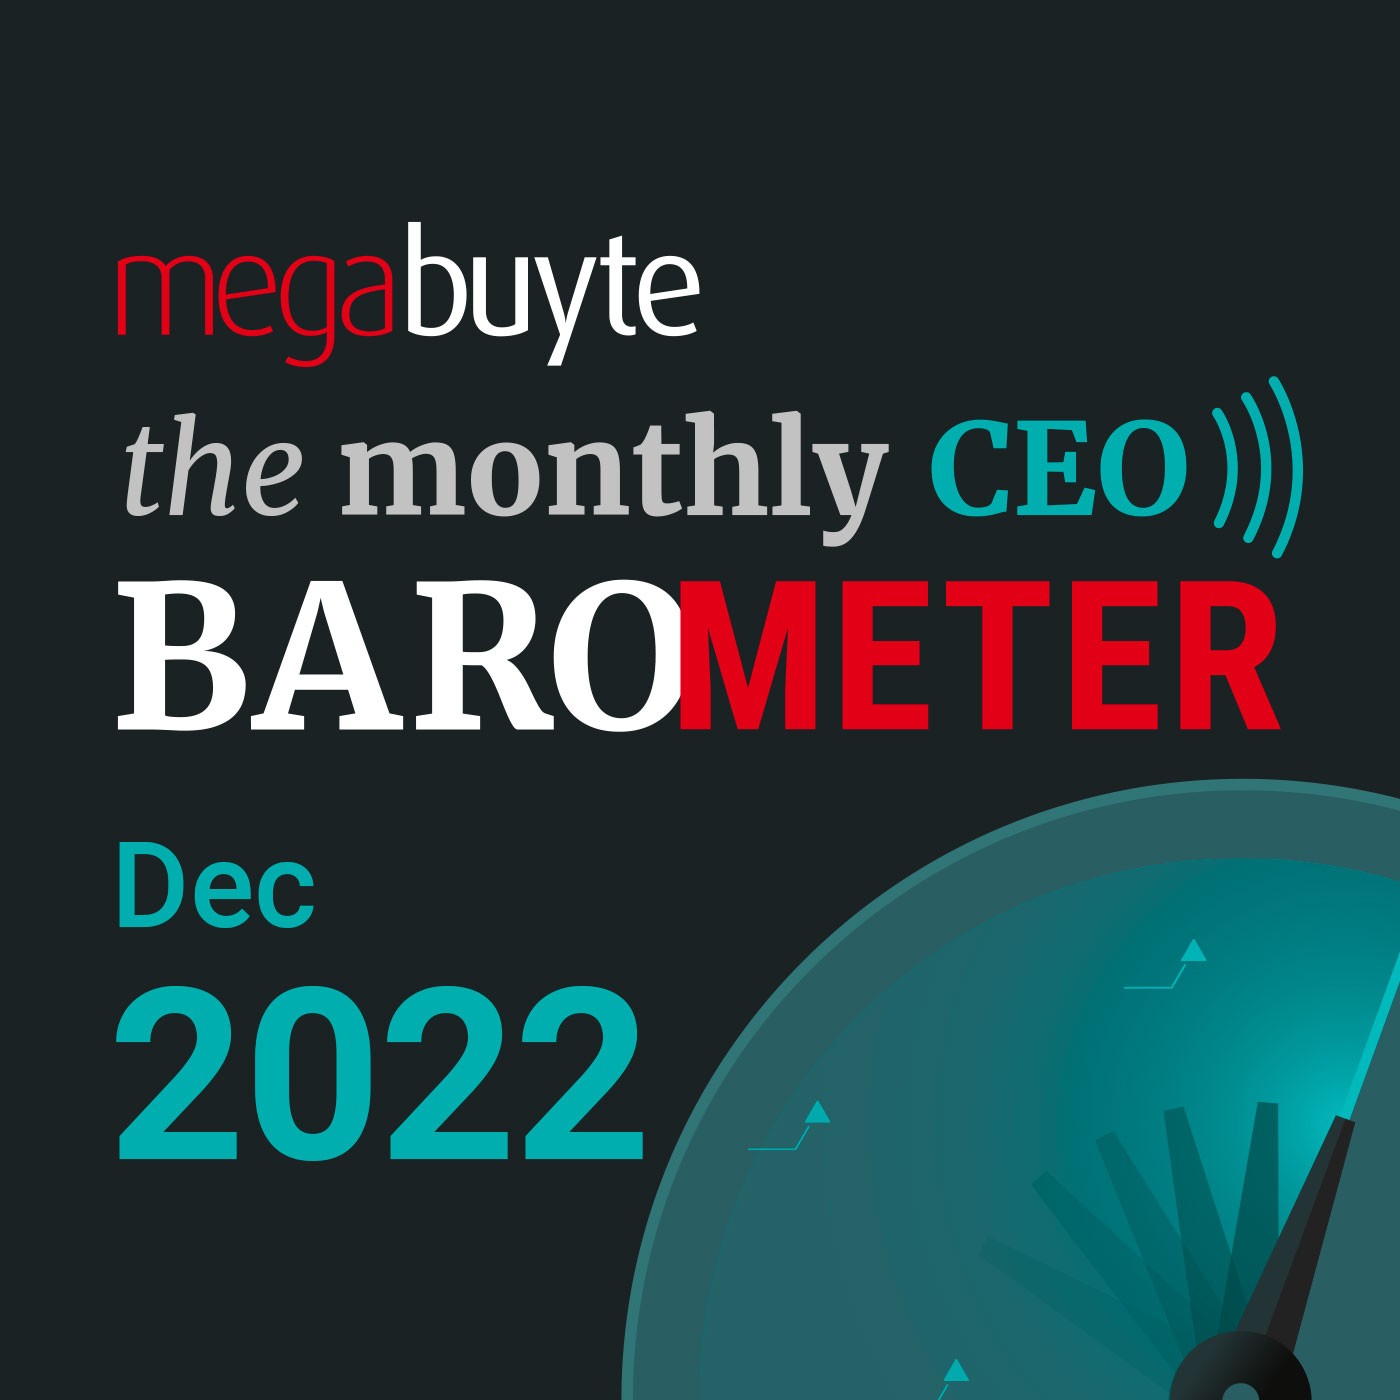 Megabuyte CEOBarometer - December 2022 update